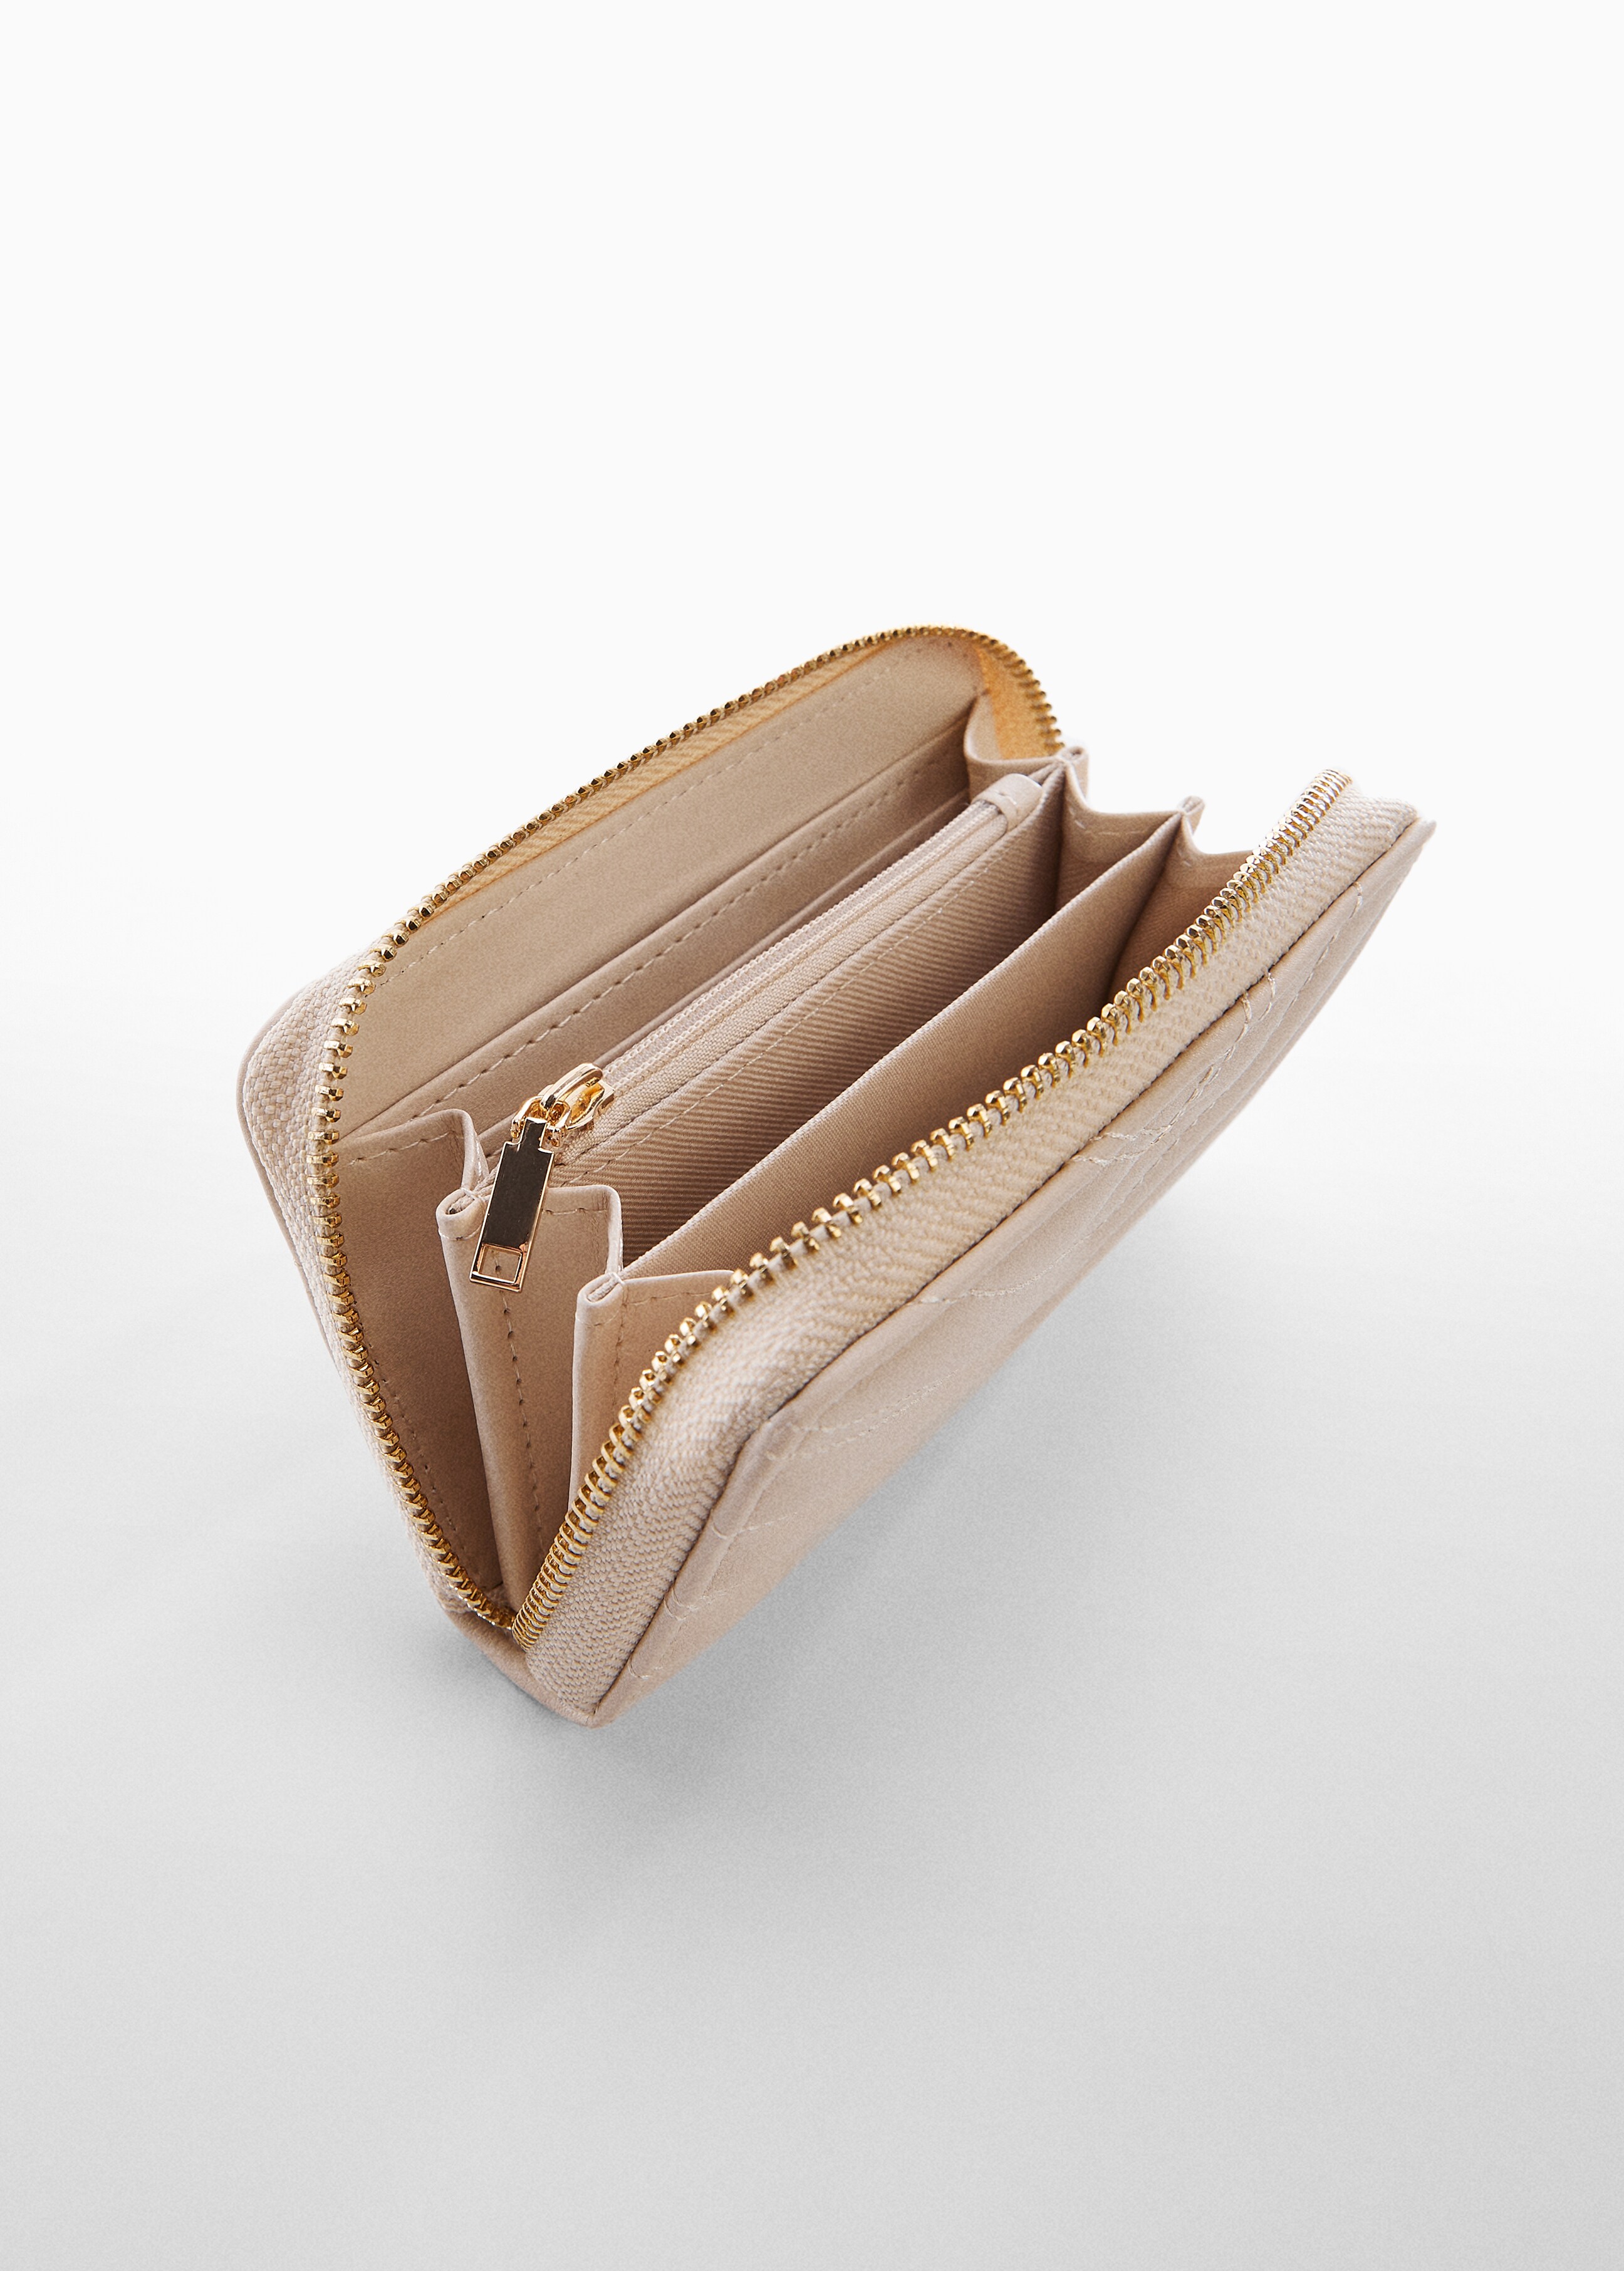 Quilted wallet - Medium plane